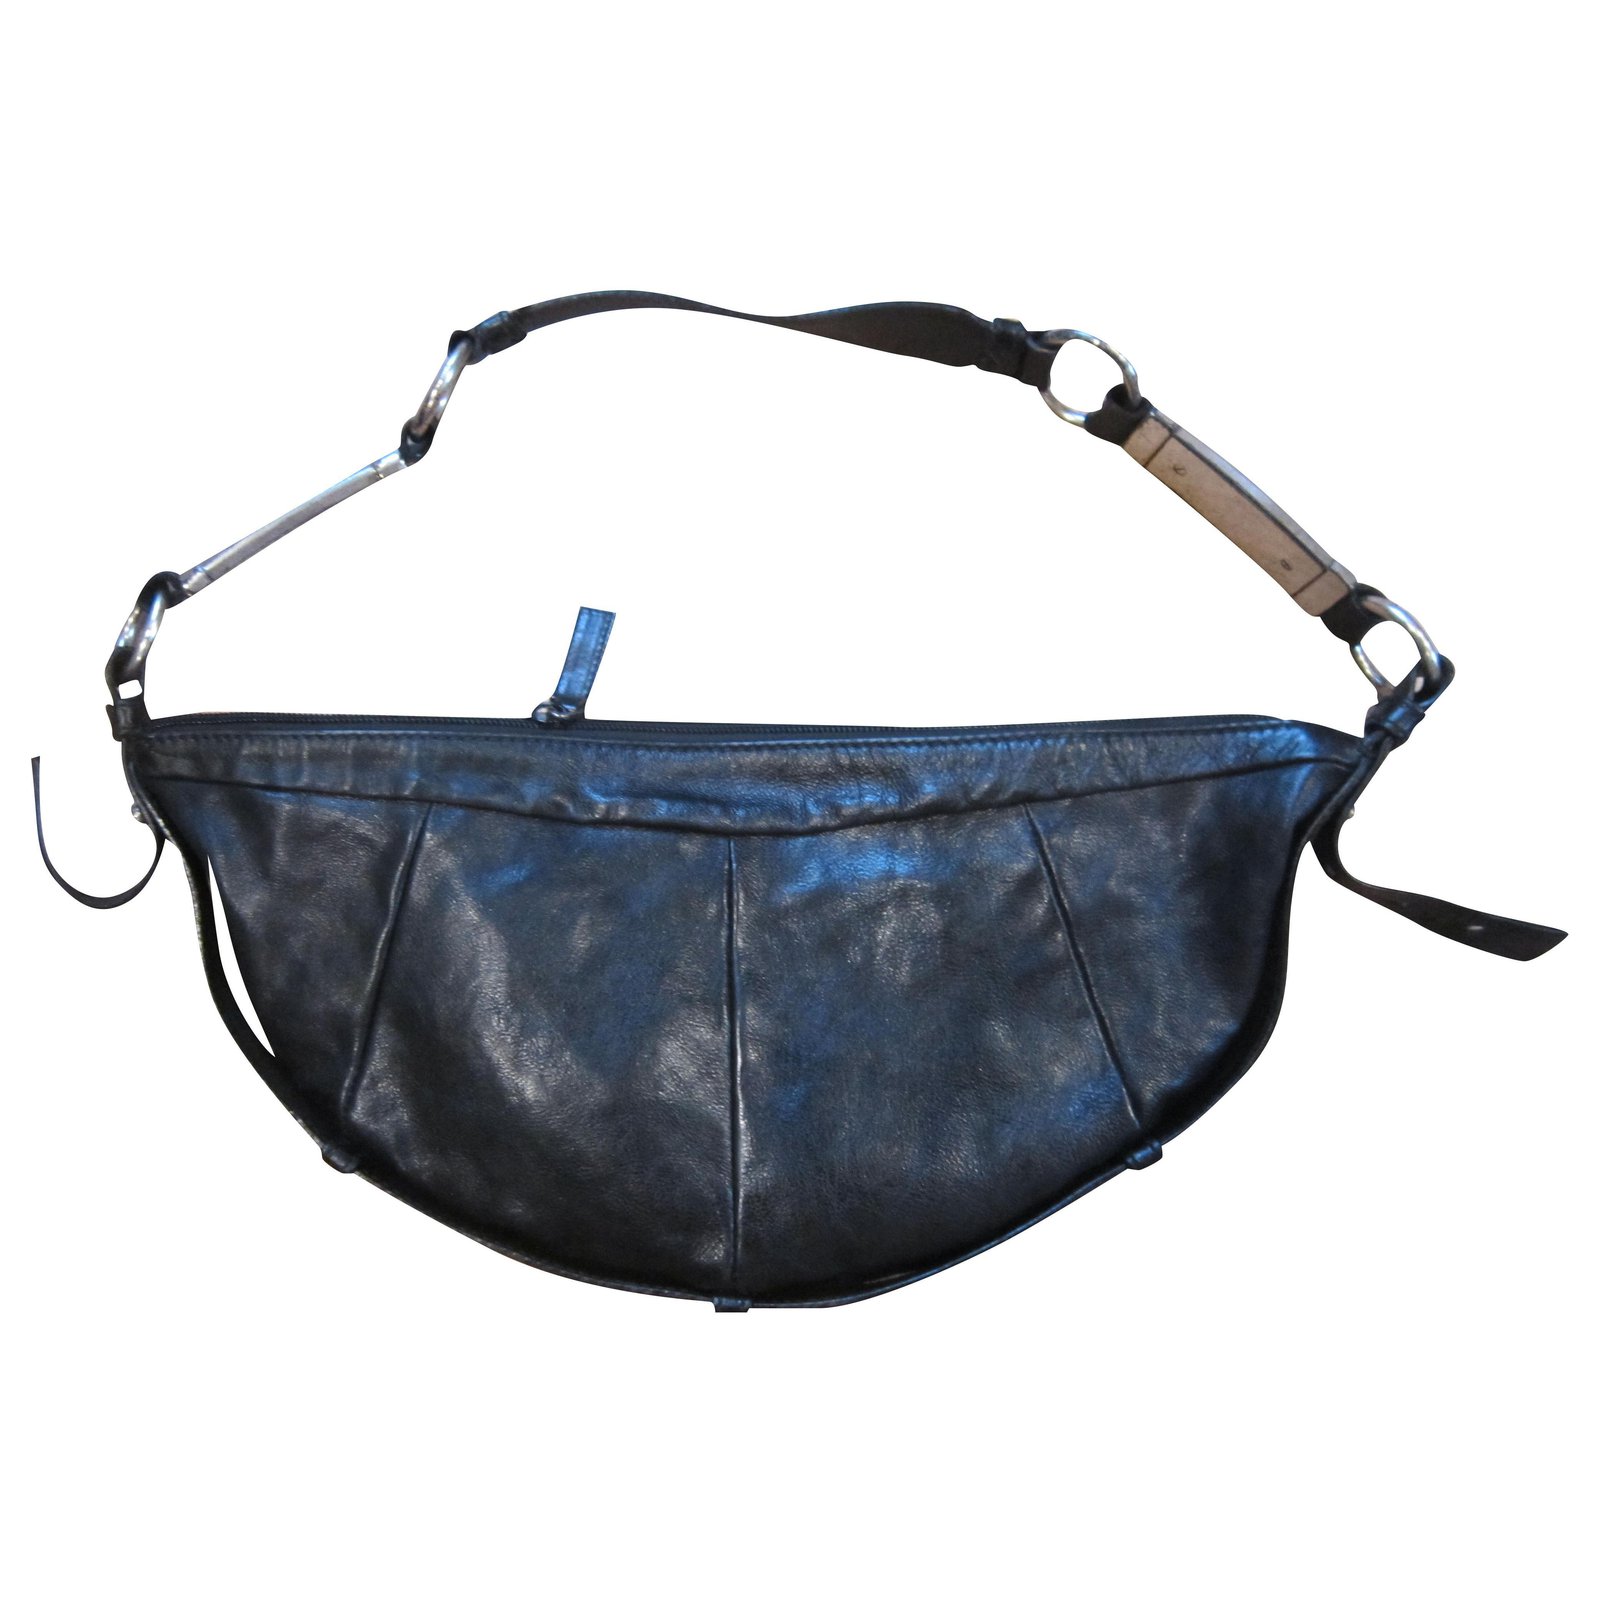 Mombasa leather handbag Yves Saint Laurent Black in Leather - 31196552